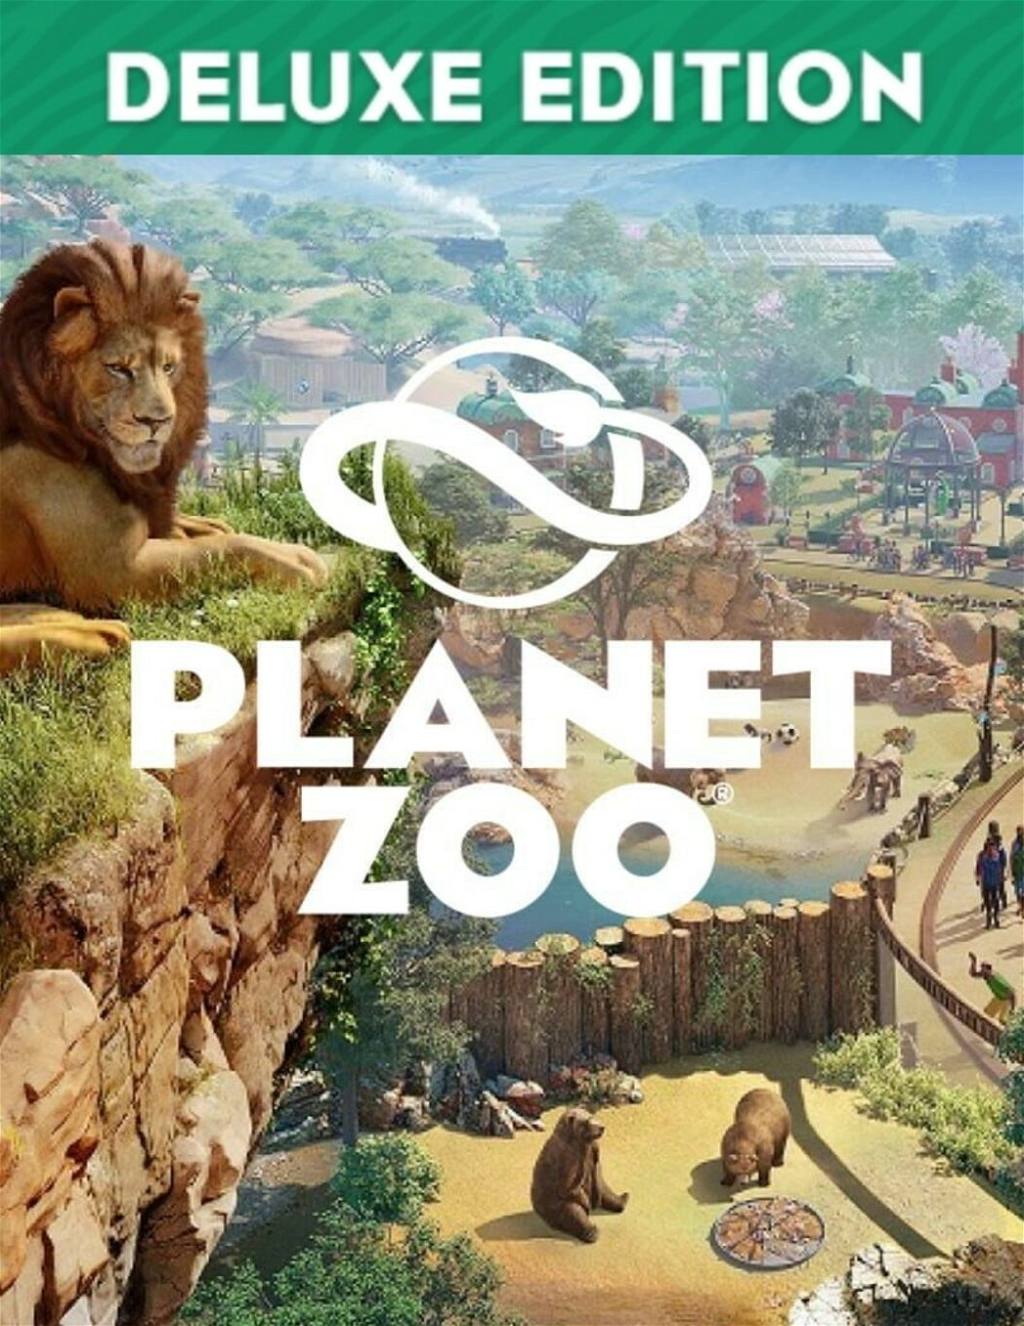 Planet Zoo - Simulation runs wild